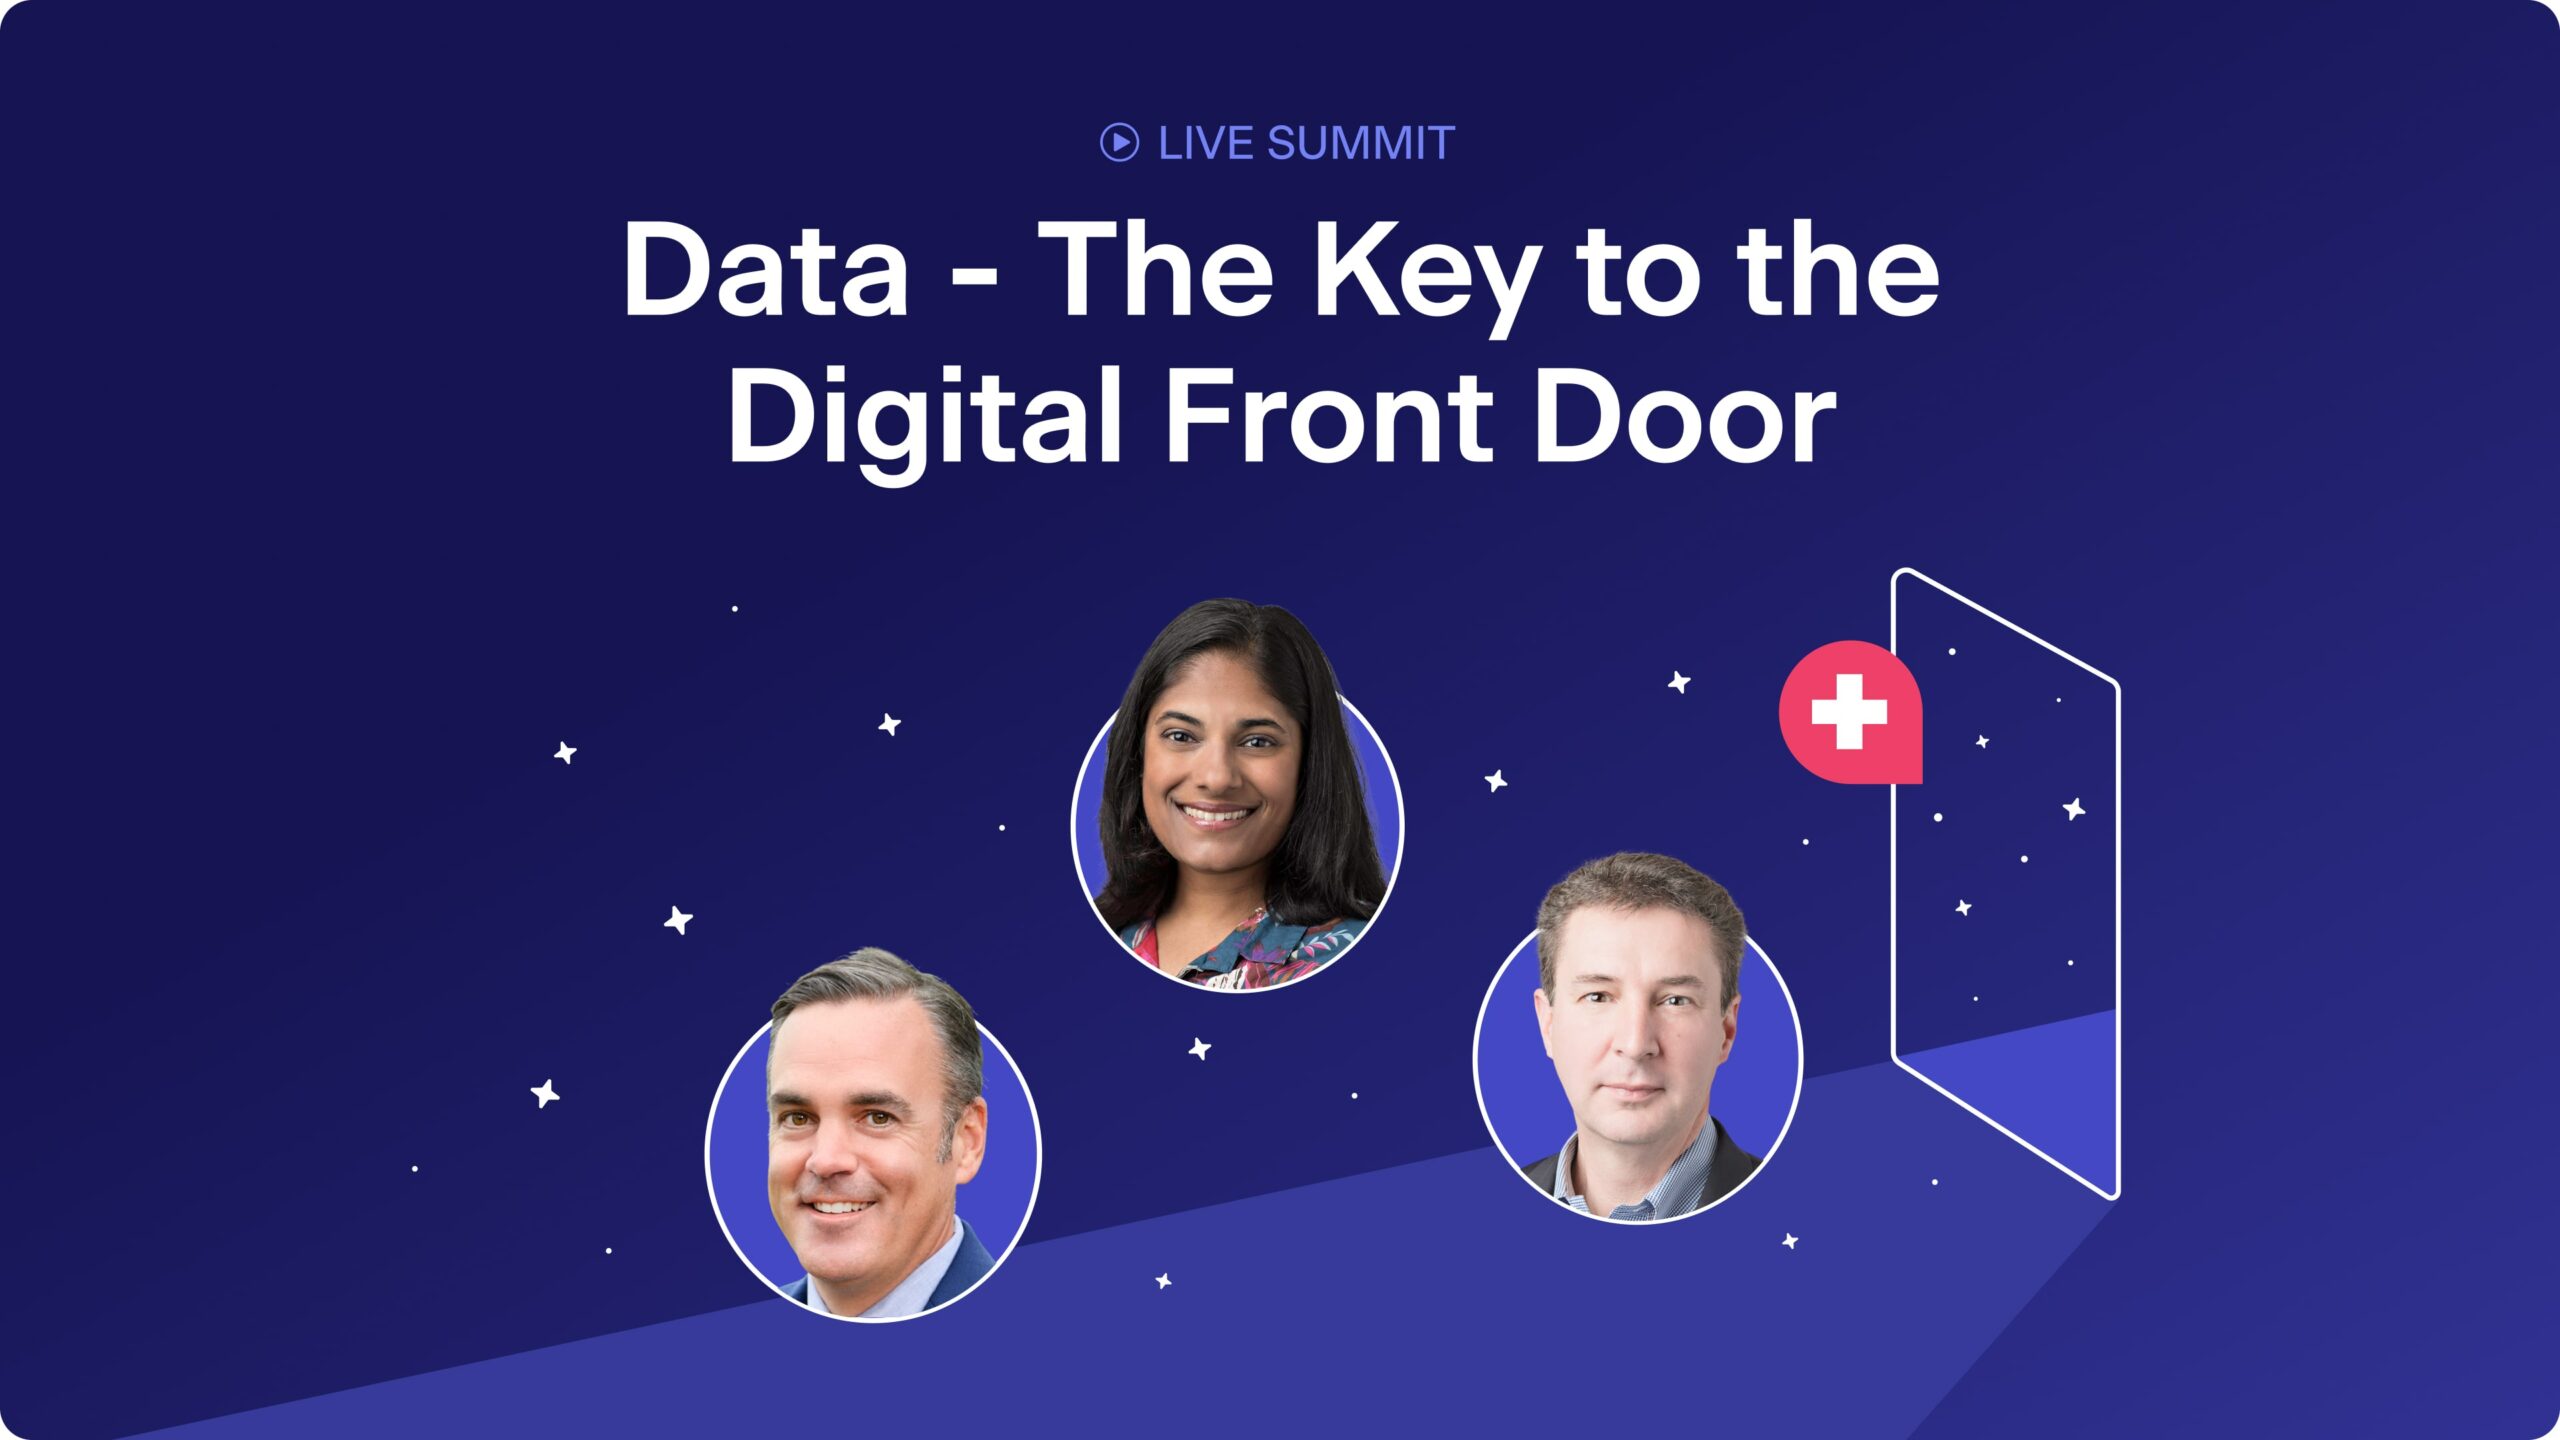 The Key to the Digital Front Door is Data